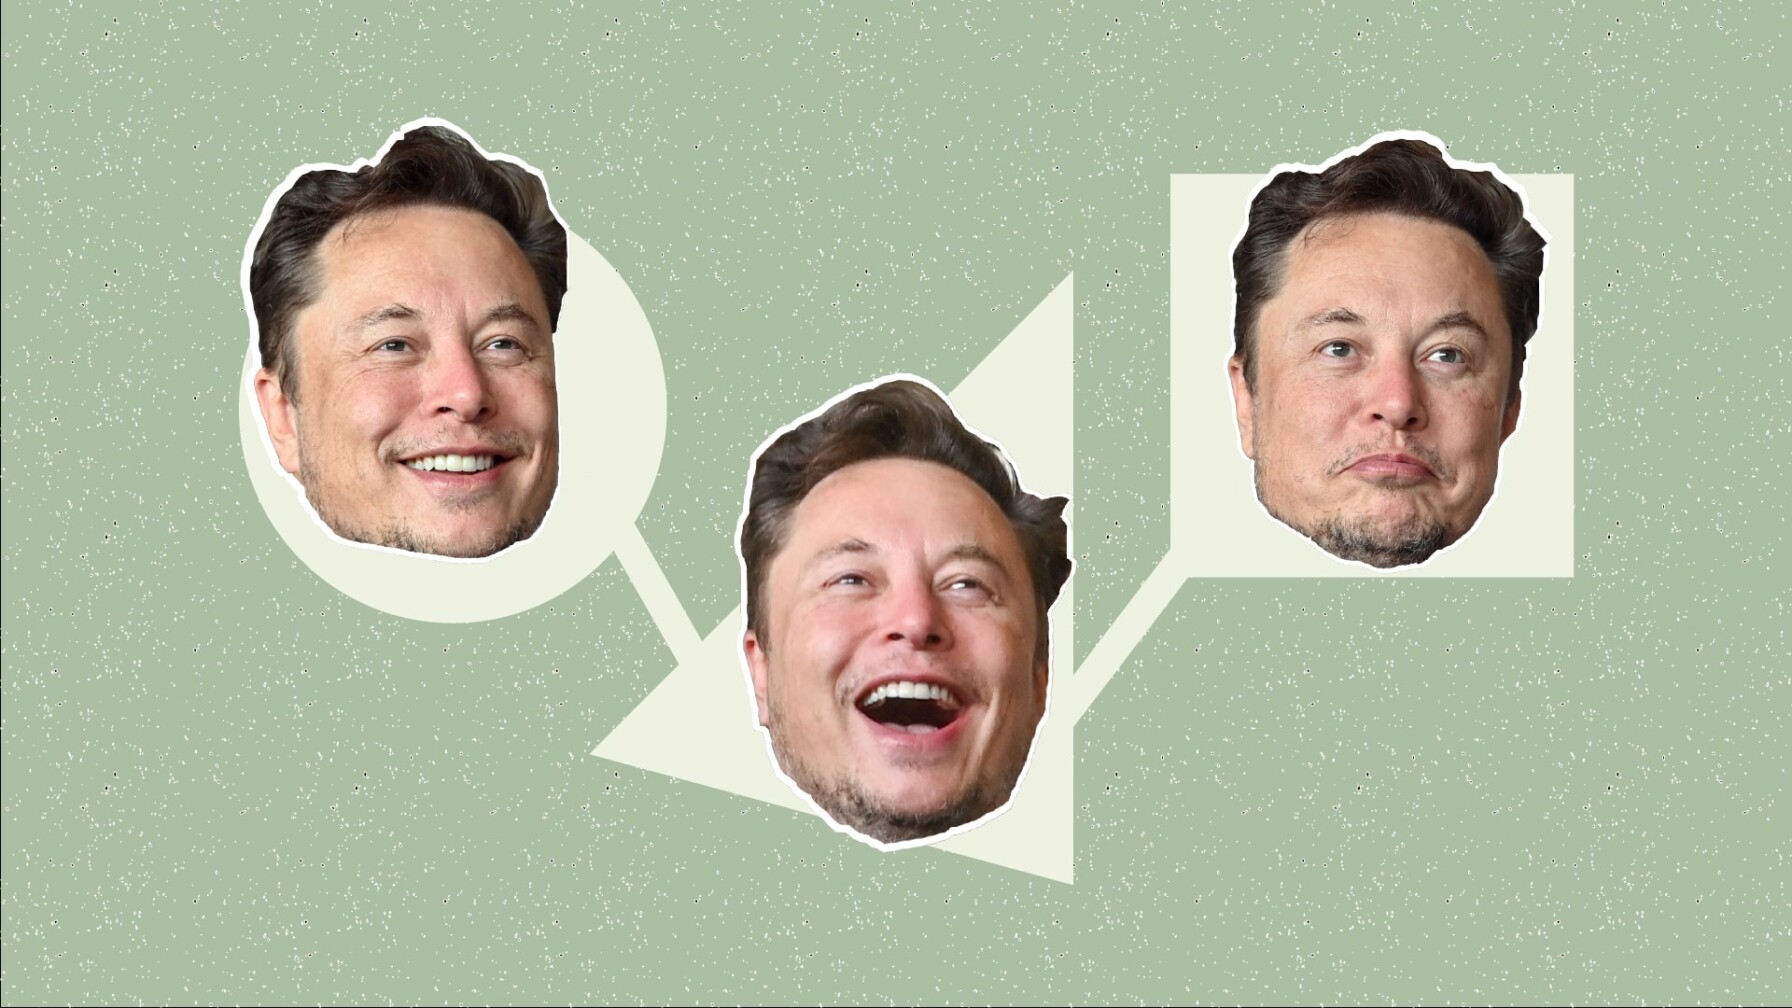 Elon Musk's faces